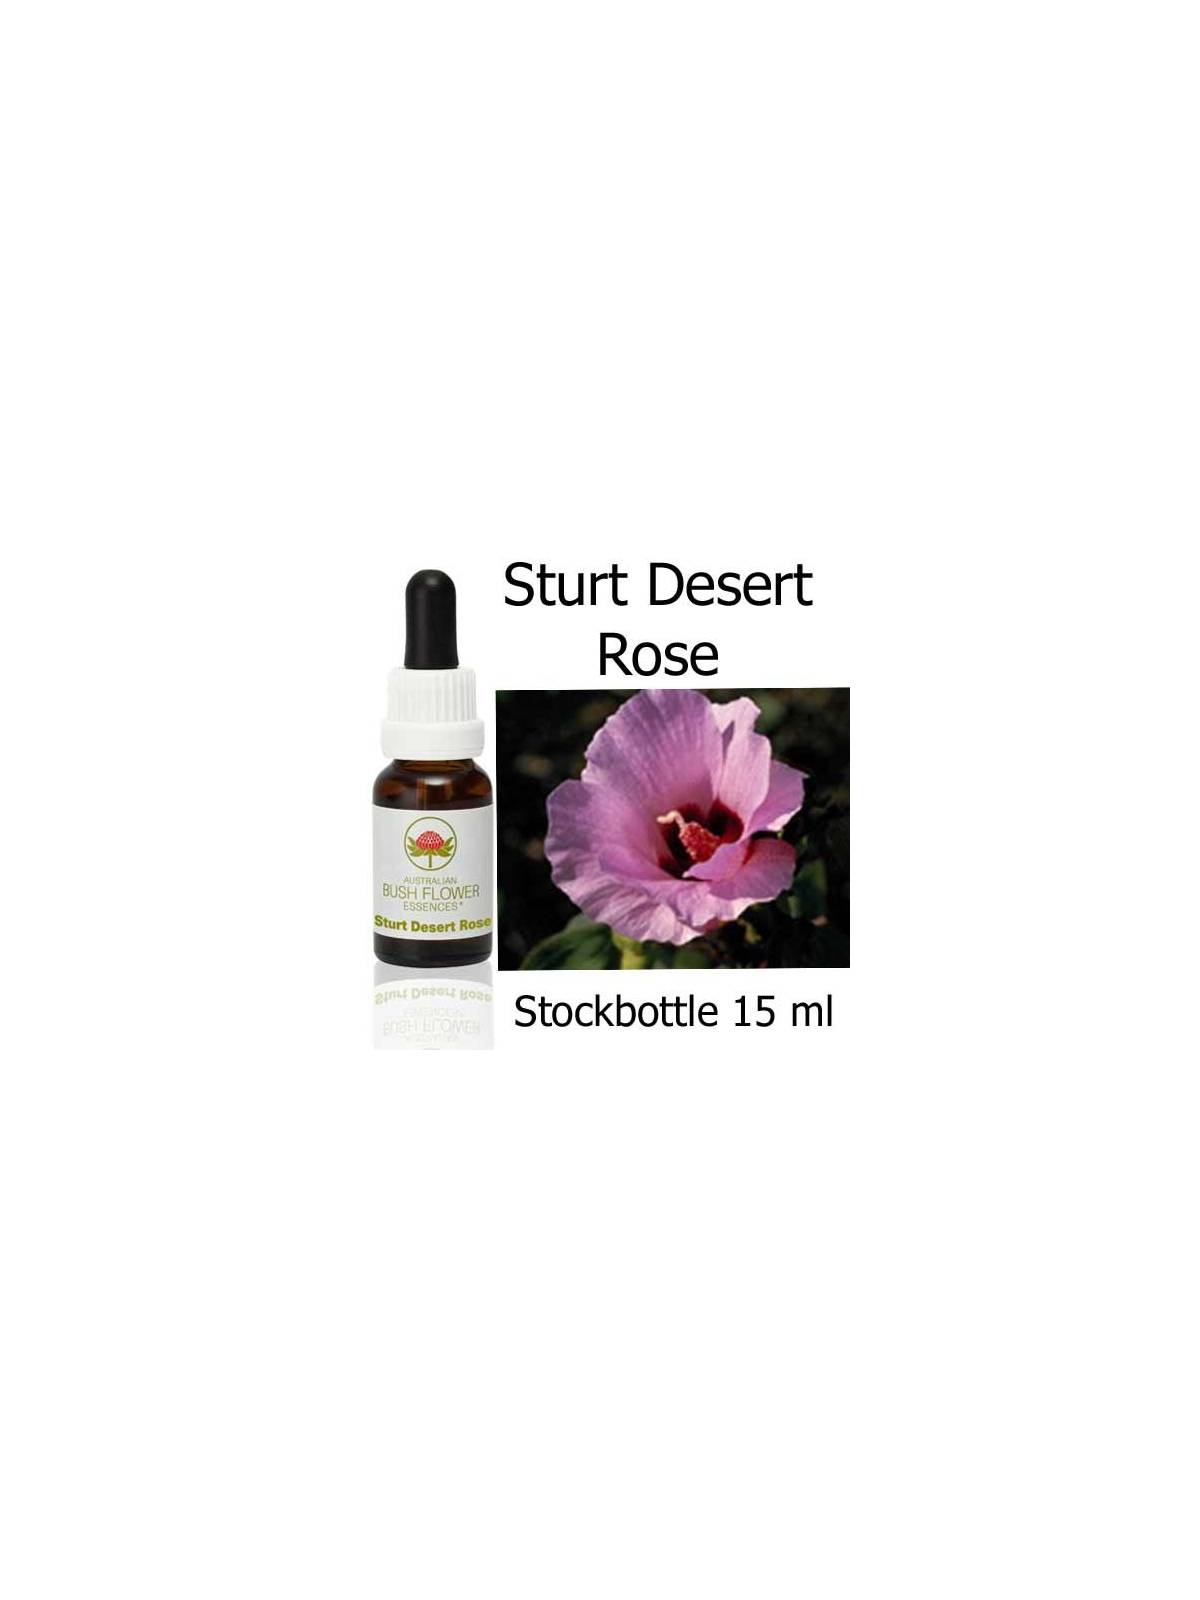 Australische Buschblüten Sturt Desert Rose Australian Bush Flower Essences Stockbottles